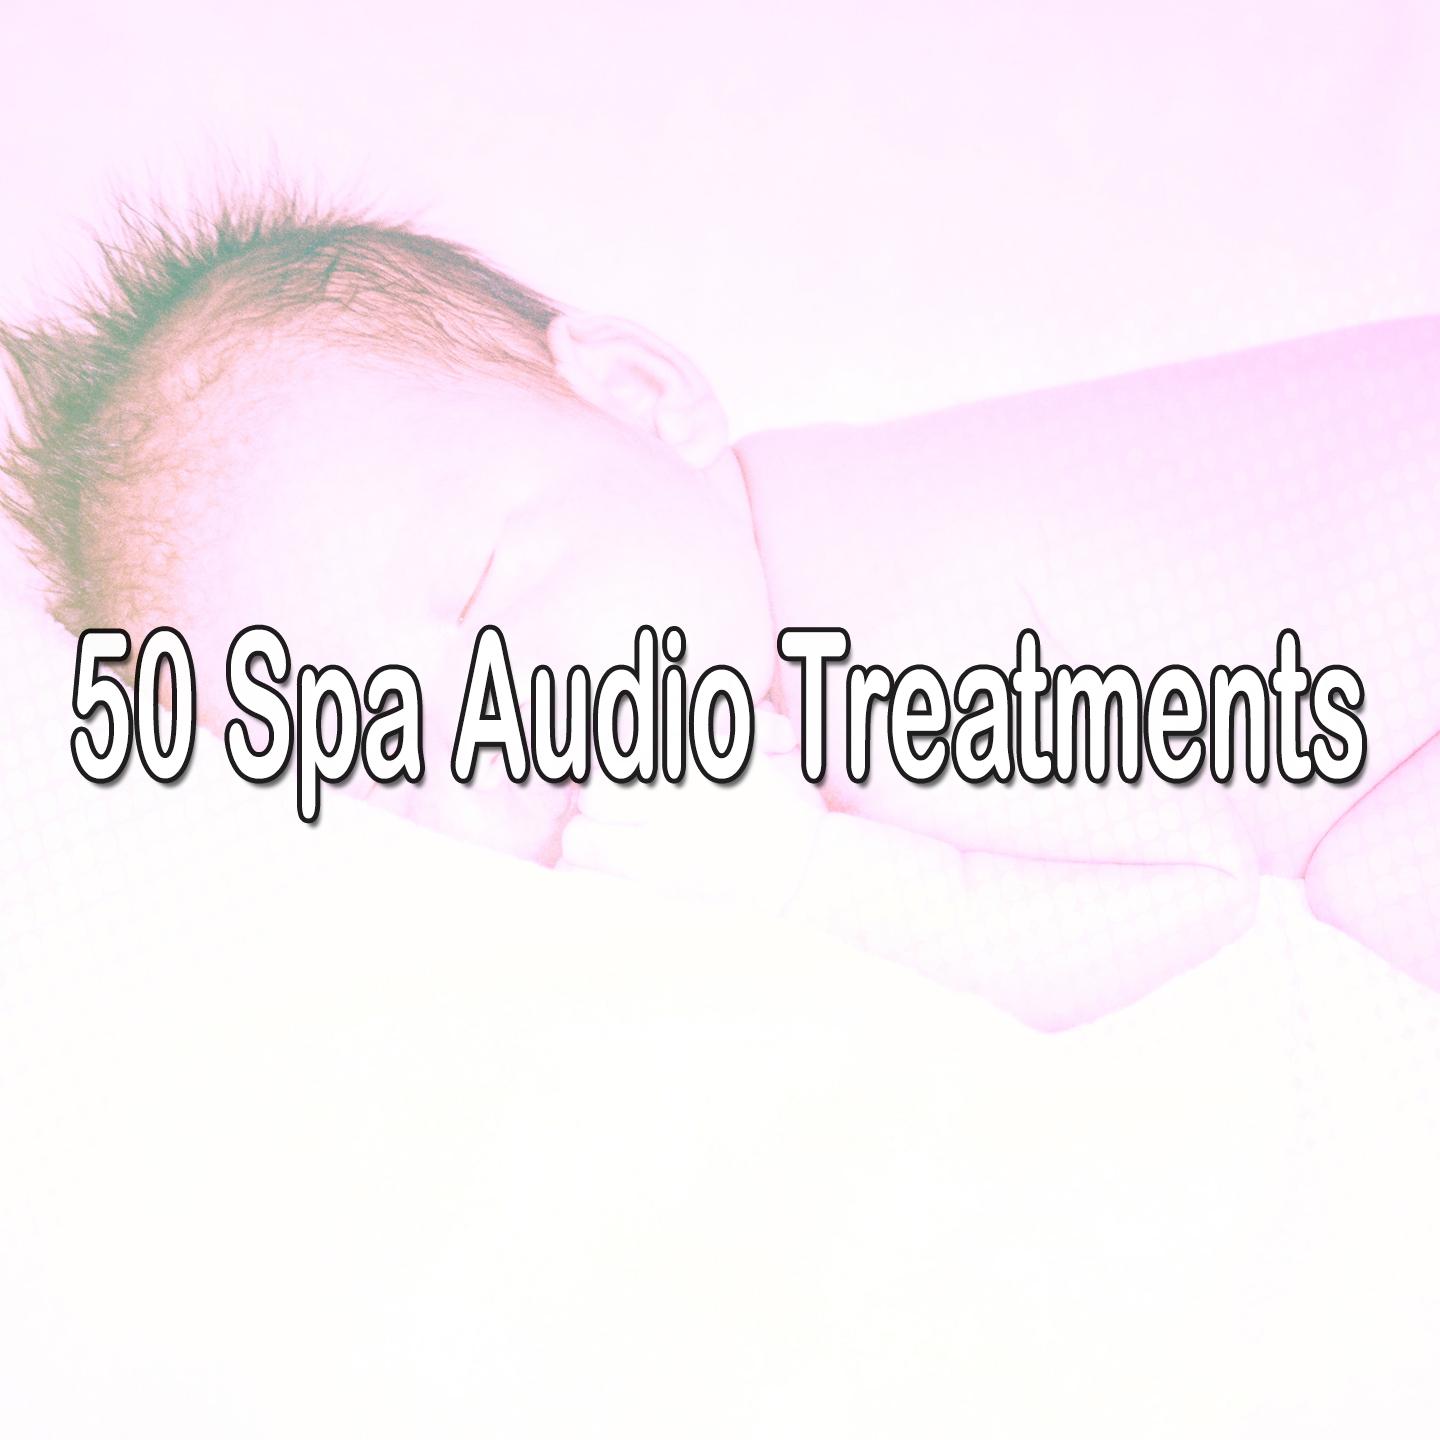 50 Spa Audio Treatments